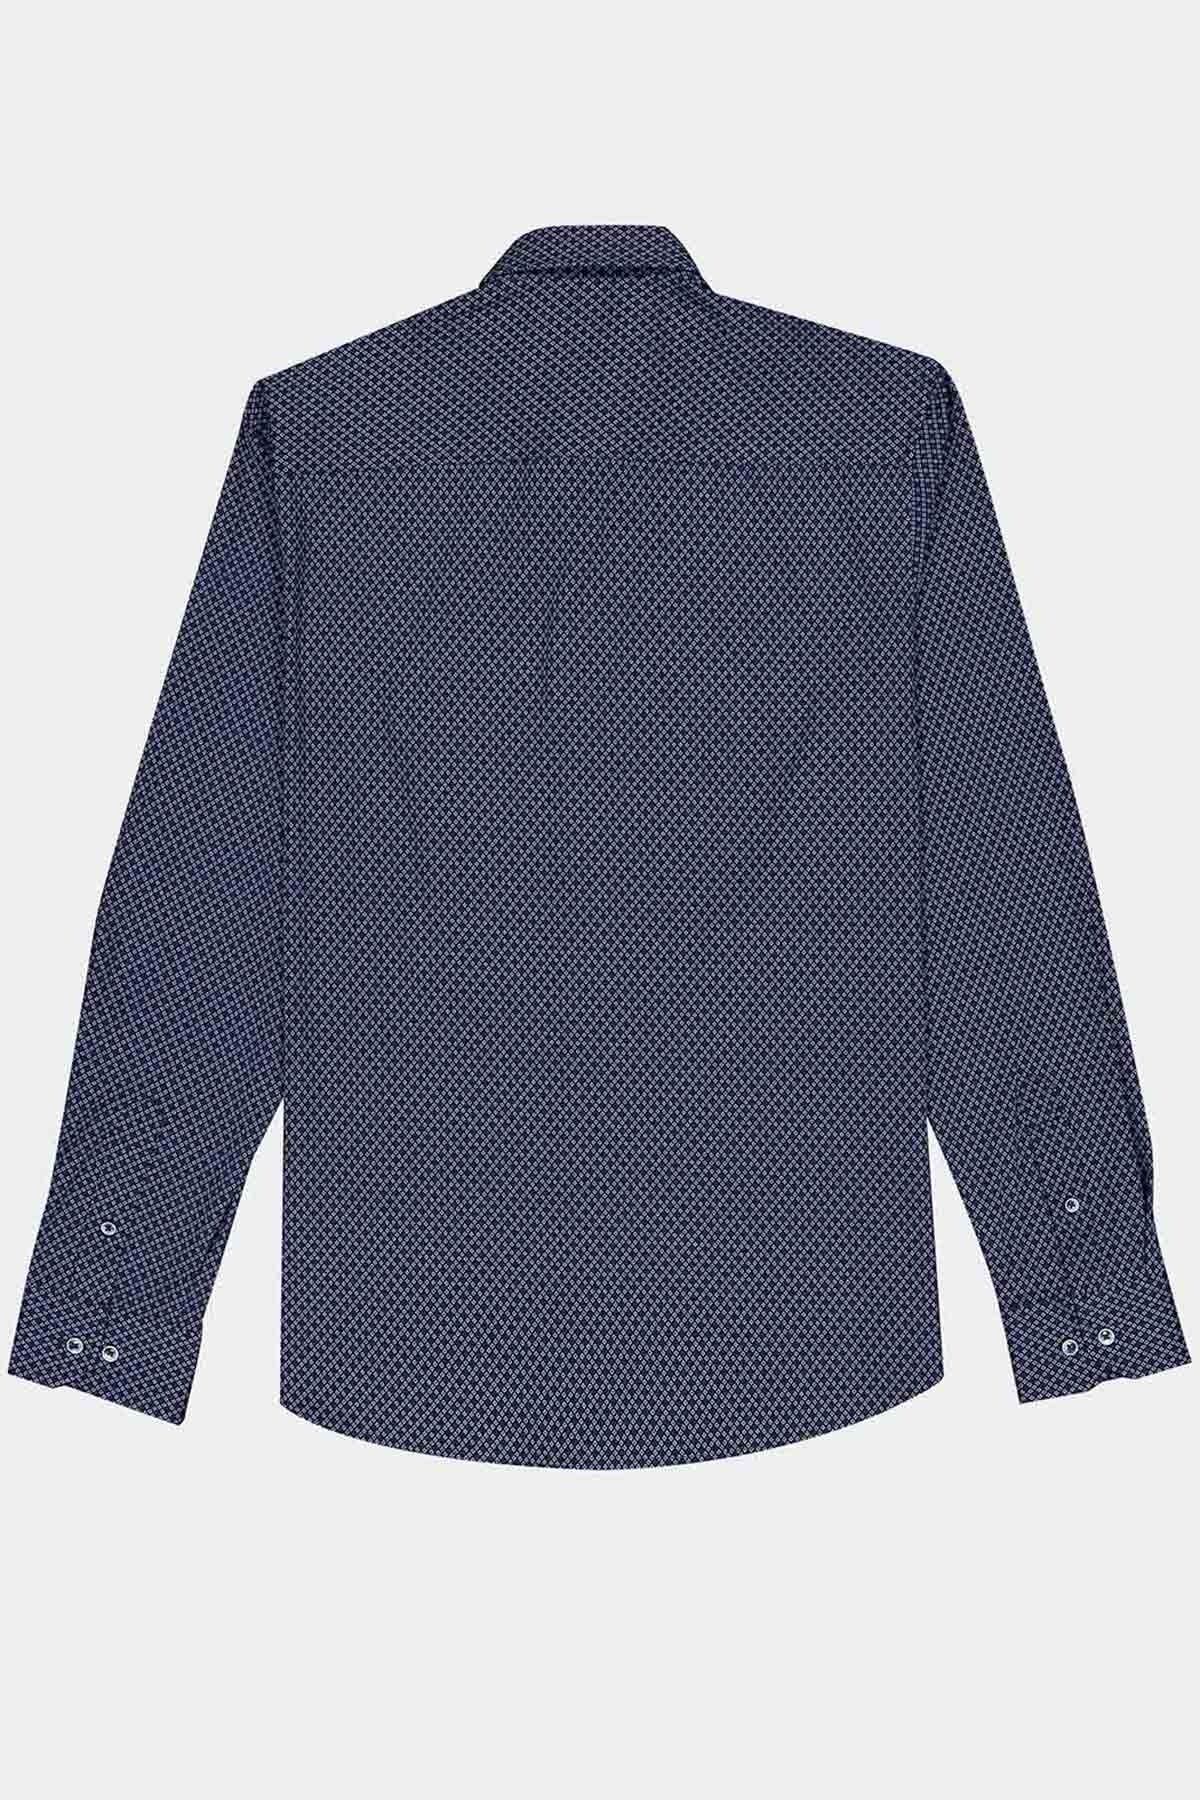 Camisa Knit Mercerized Cotton Calderoni Azul Marino Slim Fit